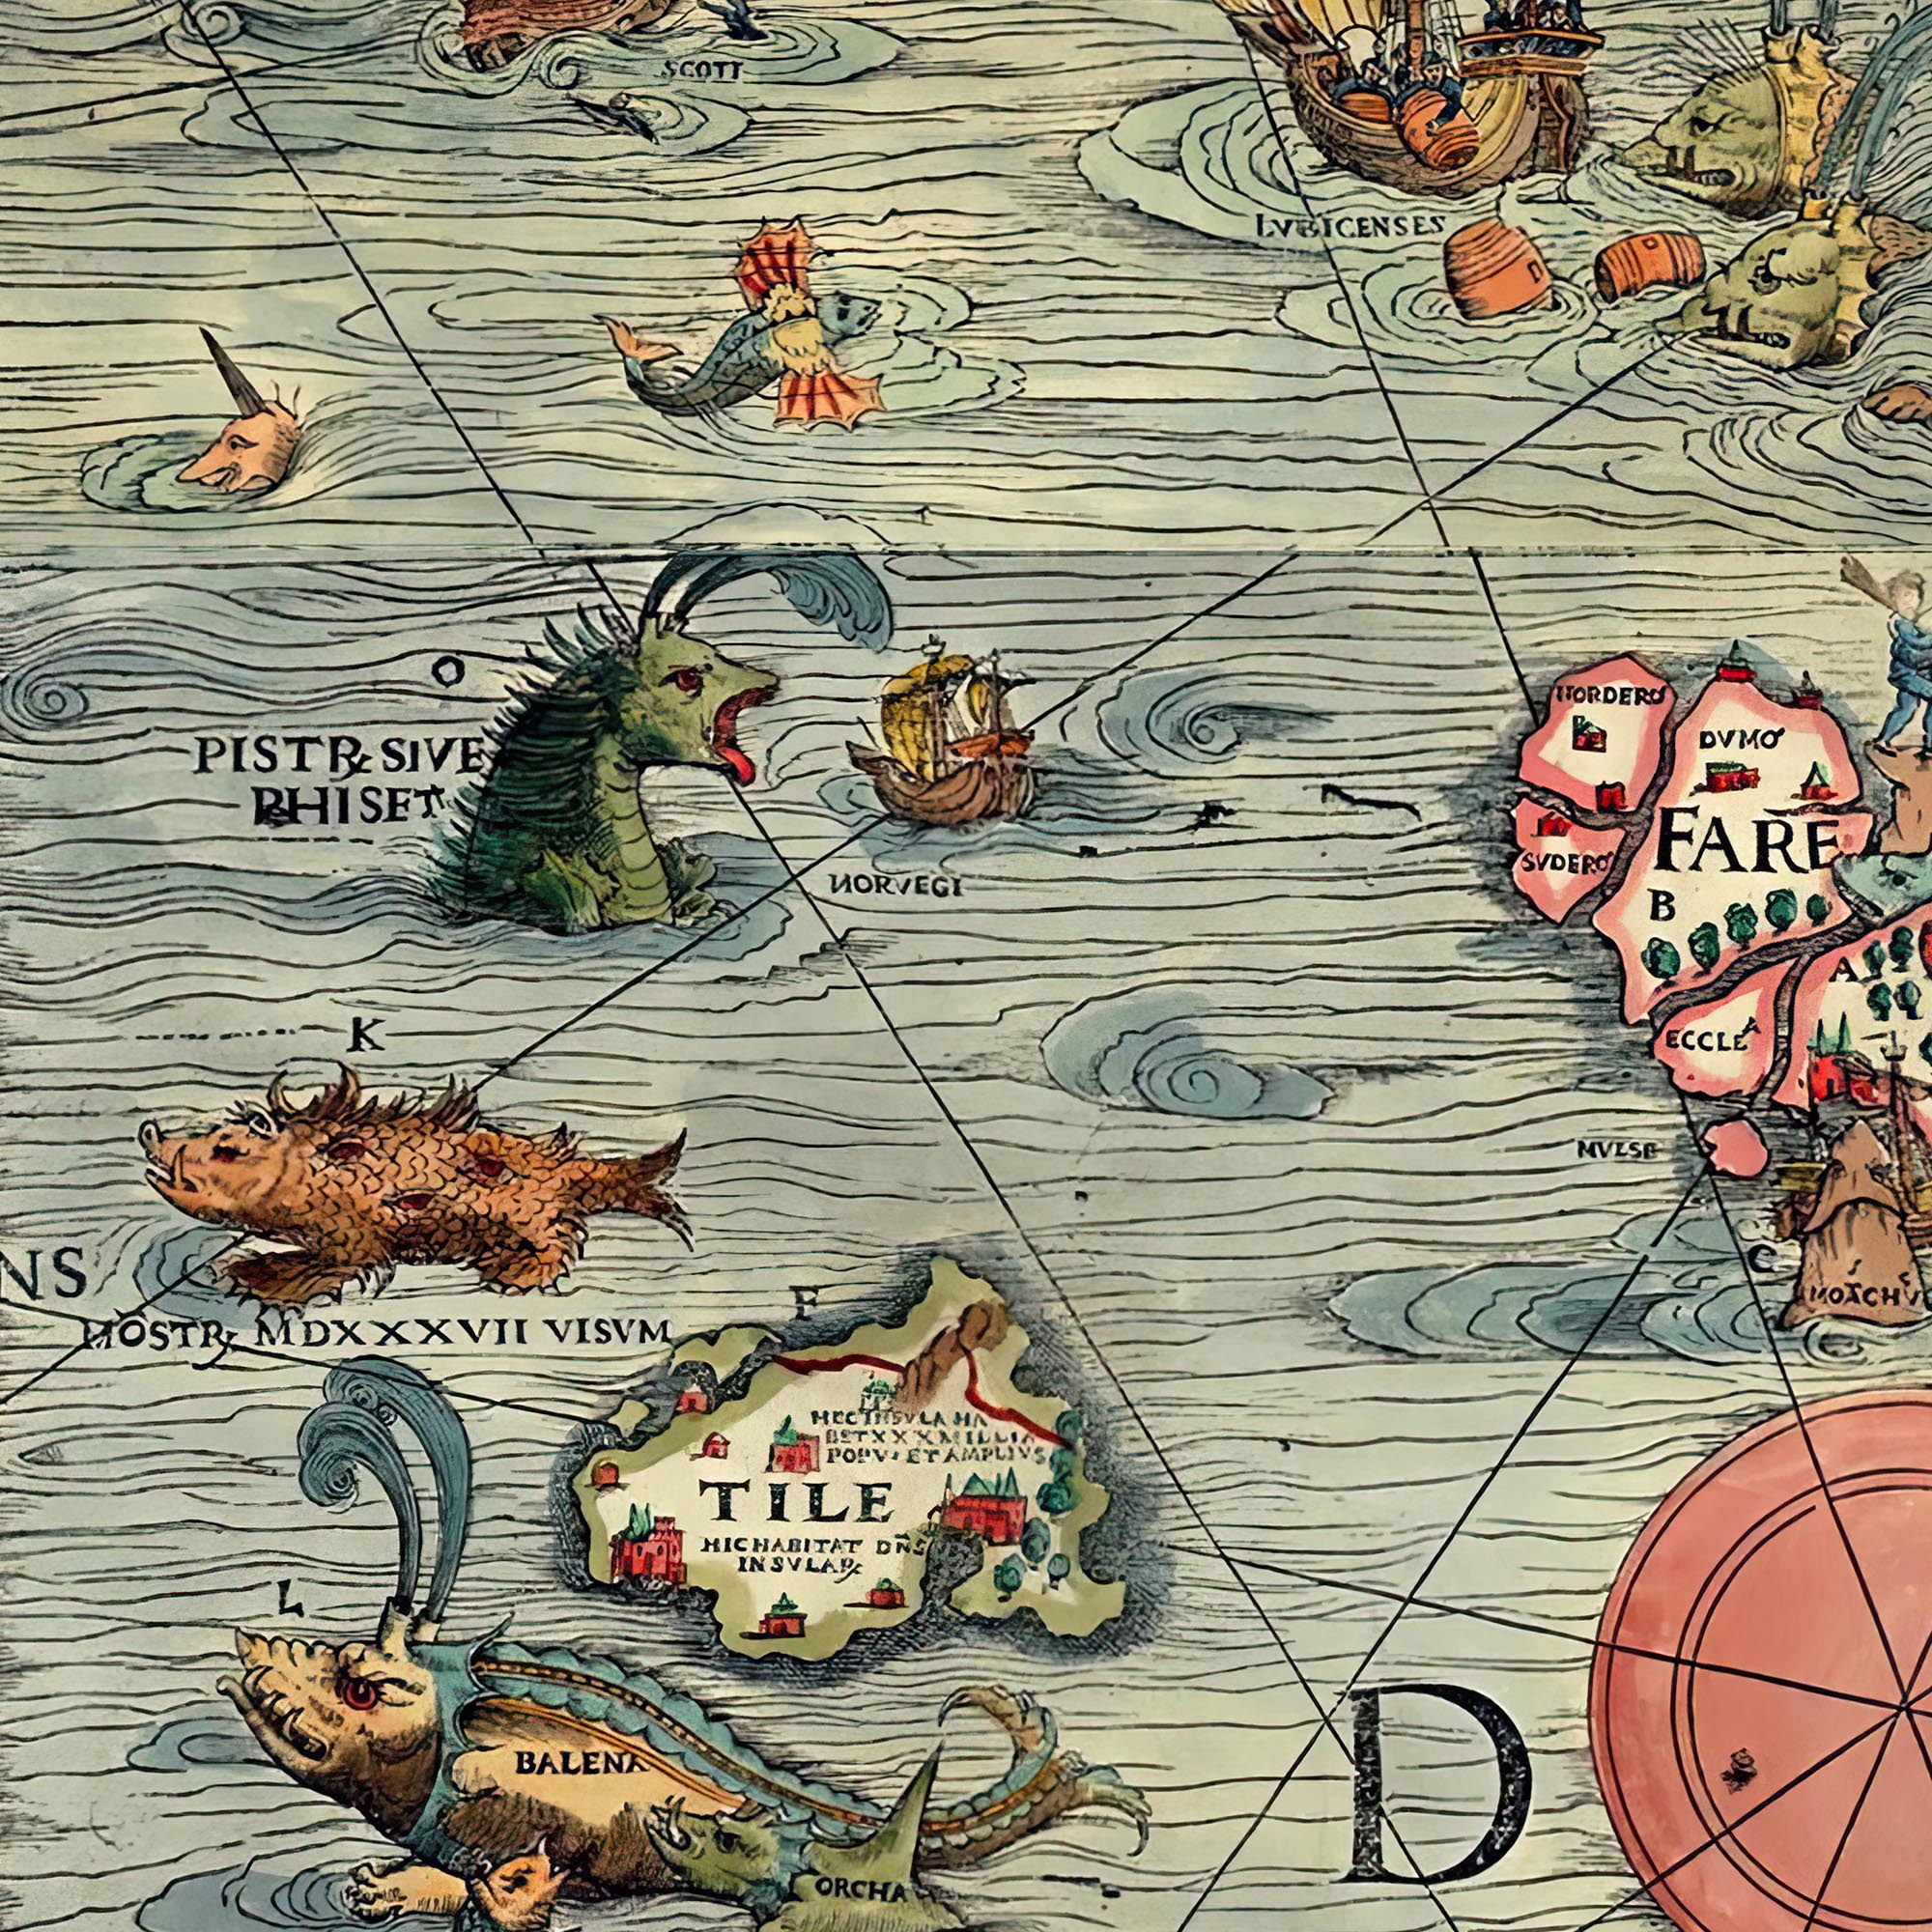 T-shirt XS Nautical Mythology Map | Kraken, Sea Serpents, Mermaids | Maritime Folklore Vintage Graphic Art T-Shirt